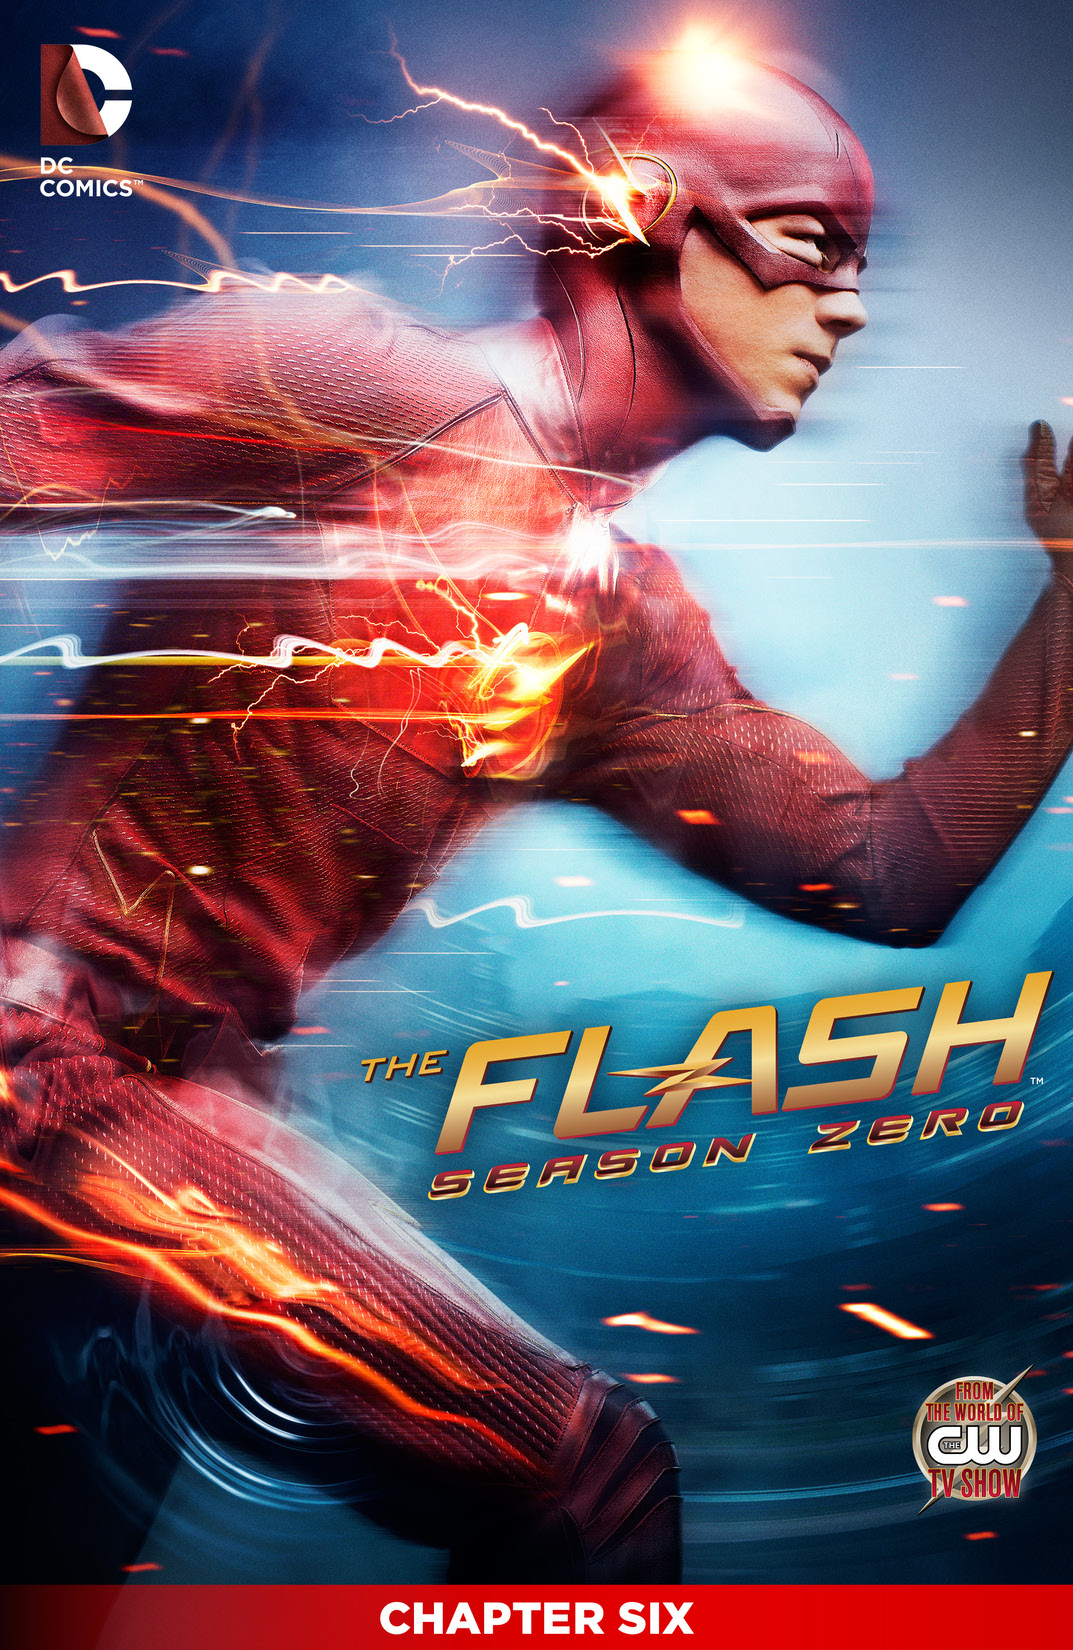 The Flash: Season Zero #6 preview images